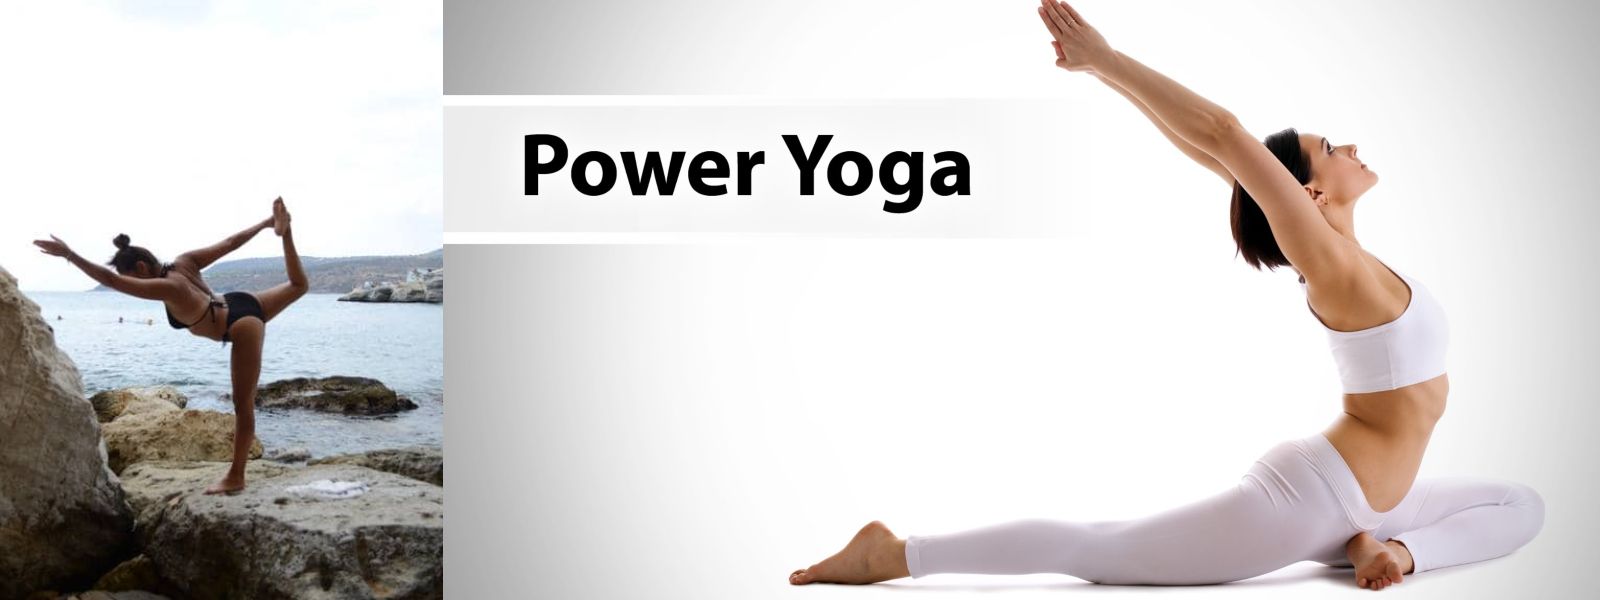 images easyblog articles 6931 power yoga poses 97d95485